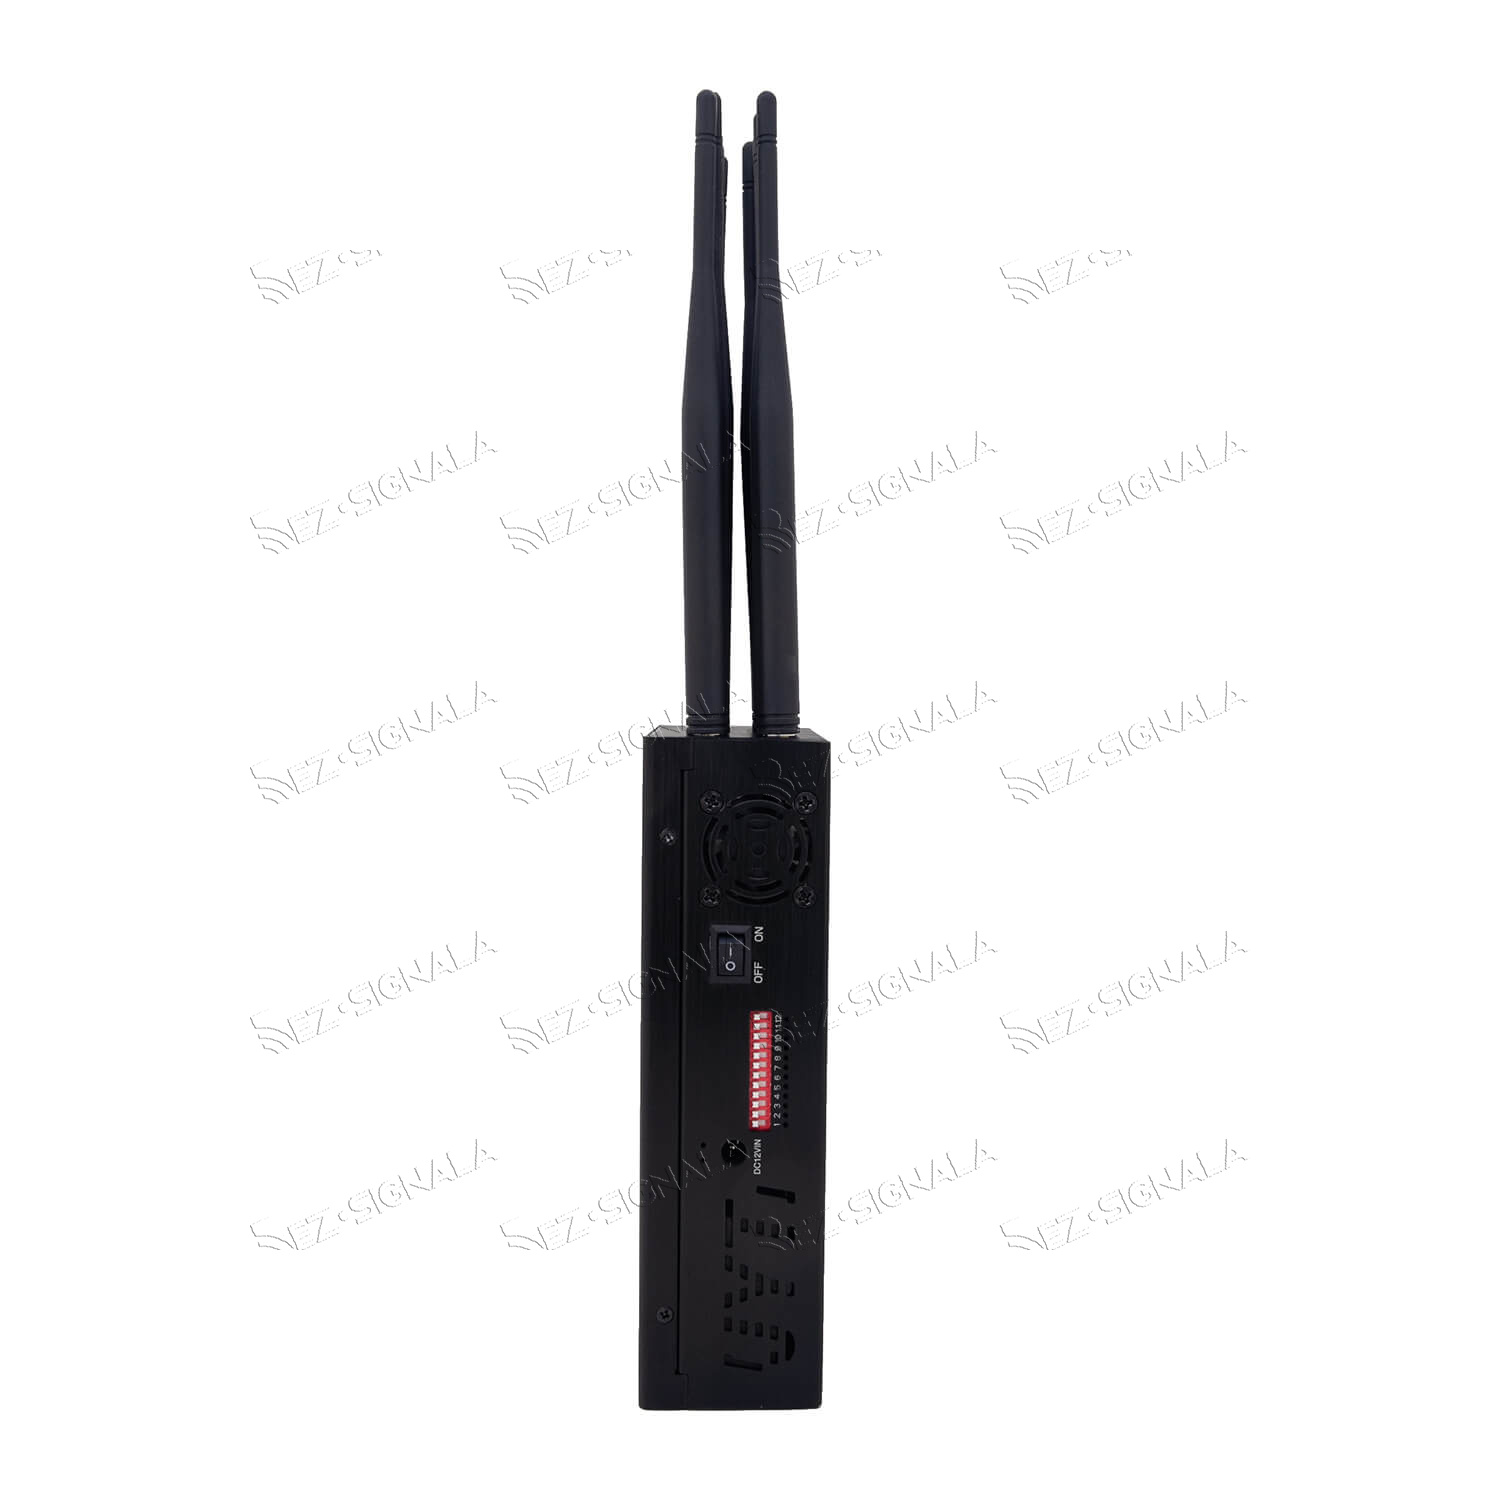 Глушилка связи JYT-1280C портативная (GSM/3G/GPS/4G LTE/Wi-Fi) - 3